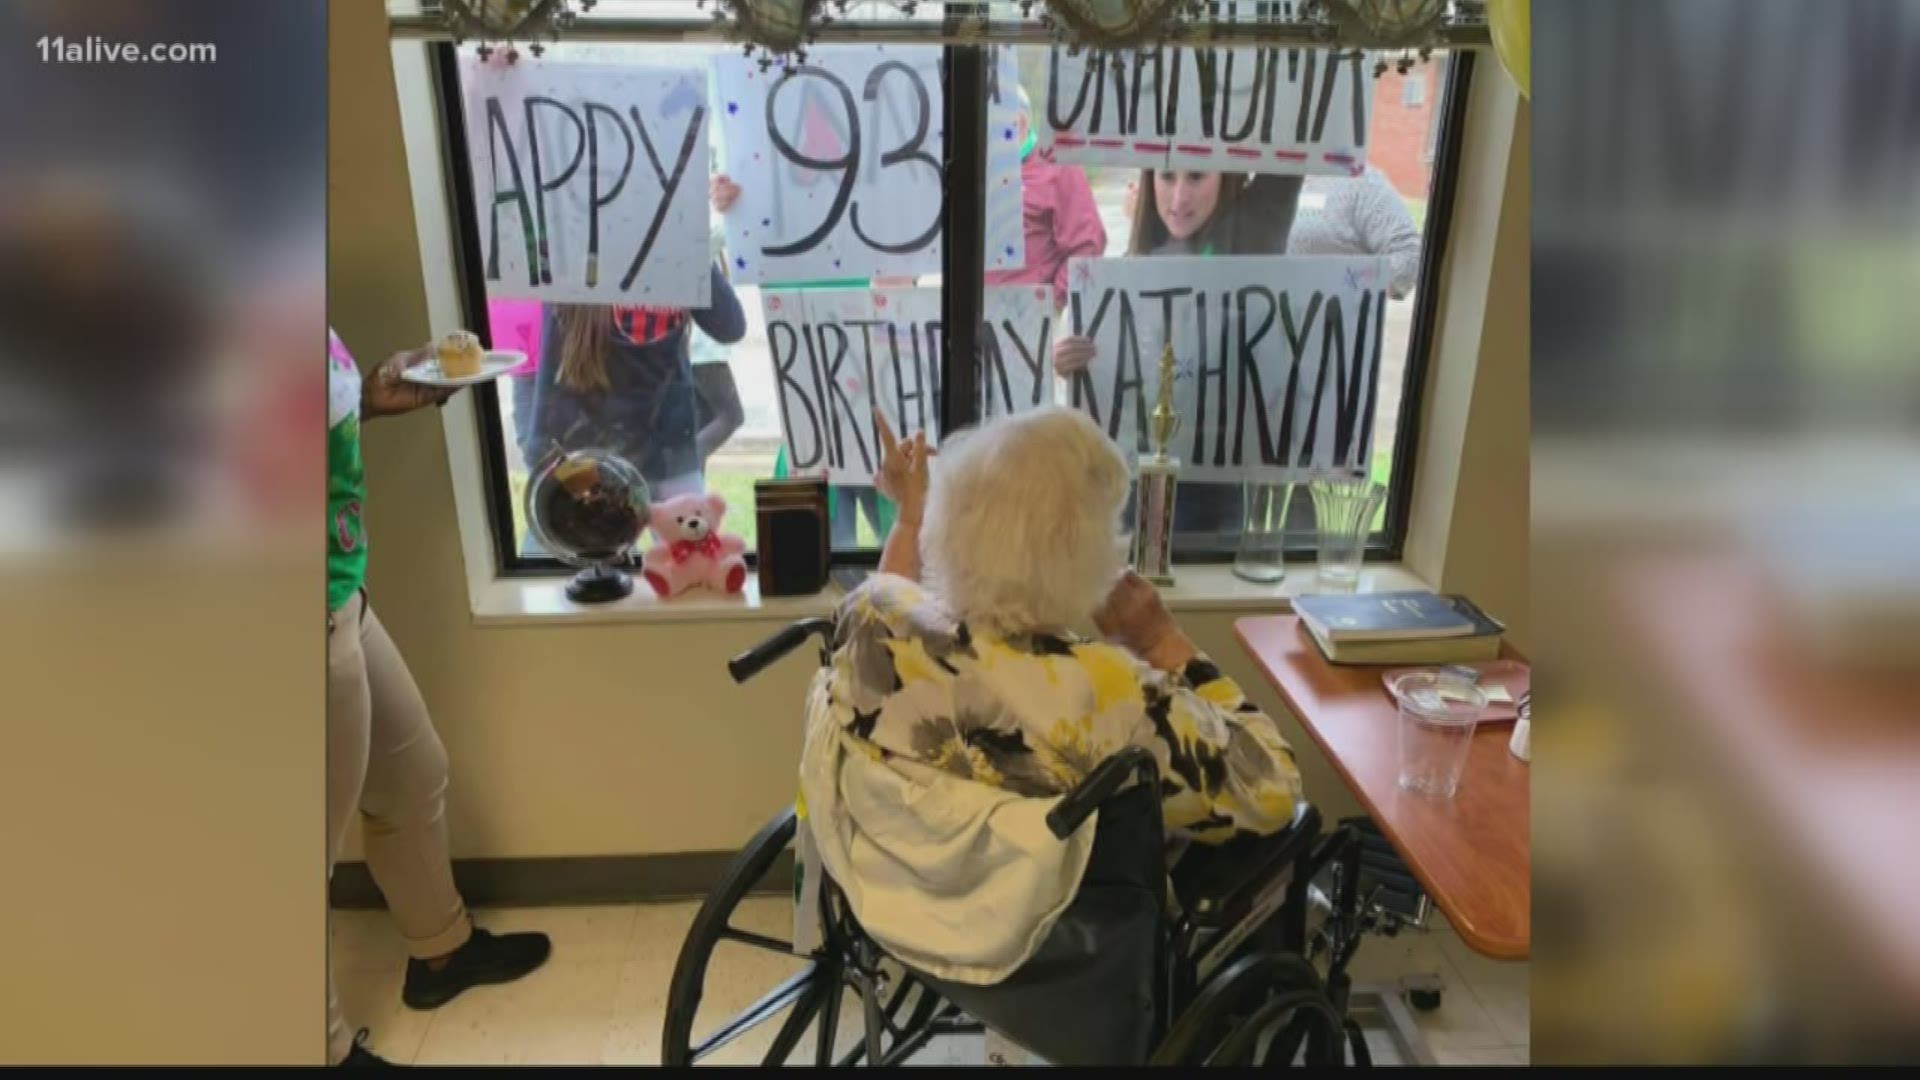 Happy 93rd Birthday!